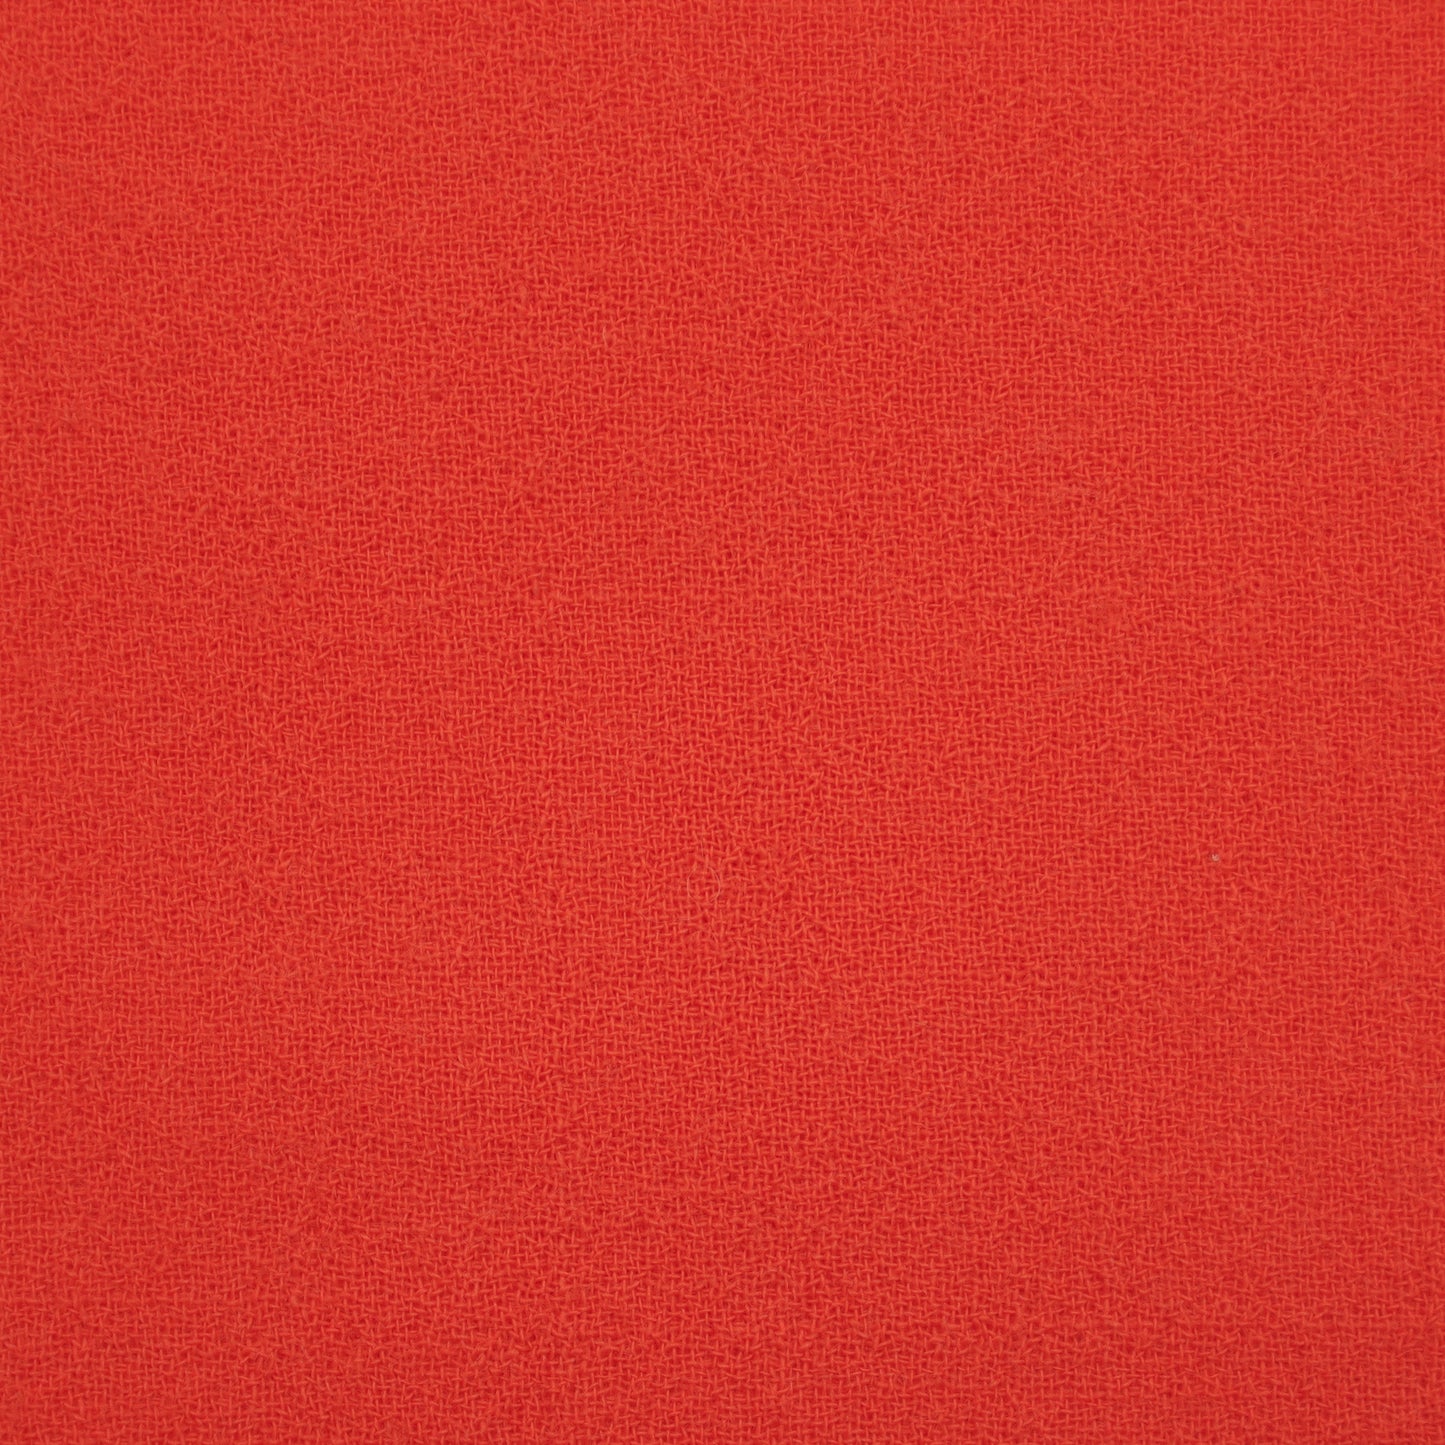 Heavyweight Moss Crepe Wool in Crimson (Red)